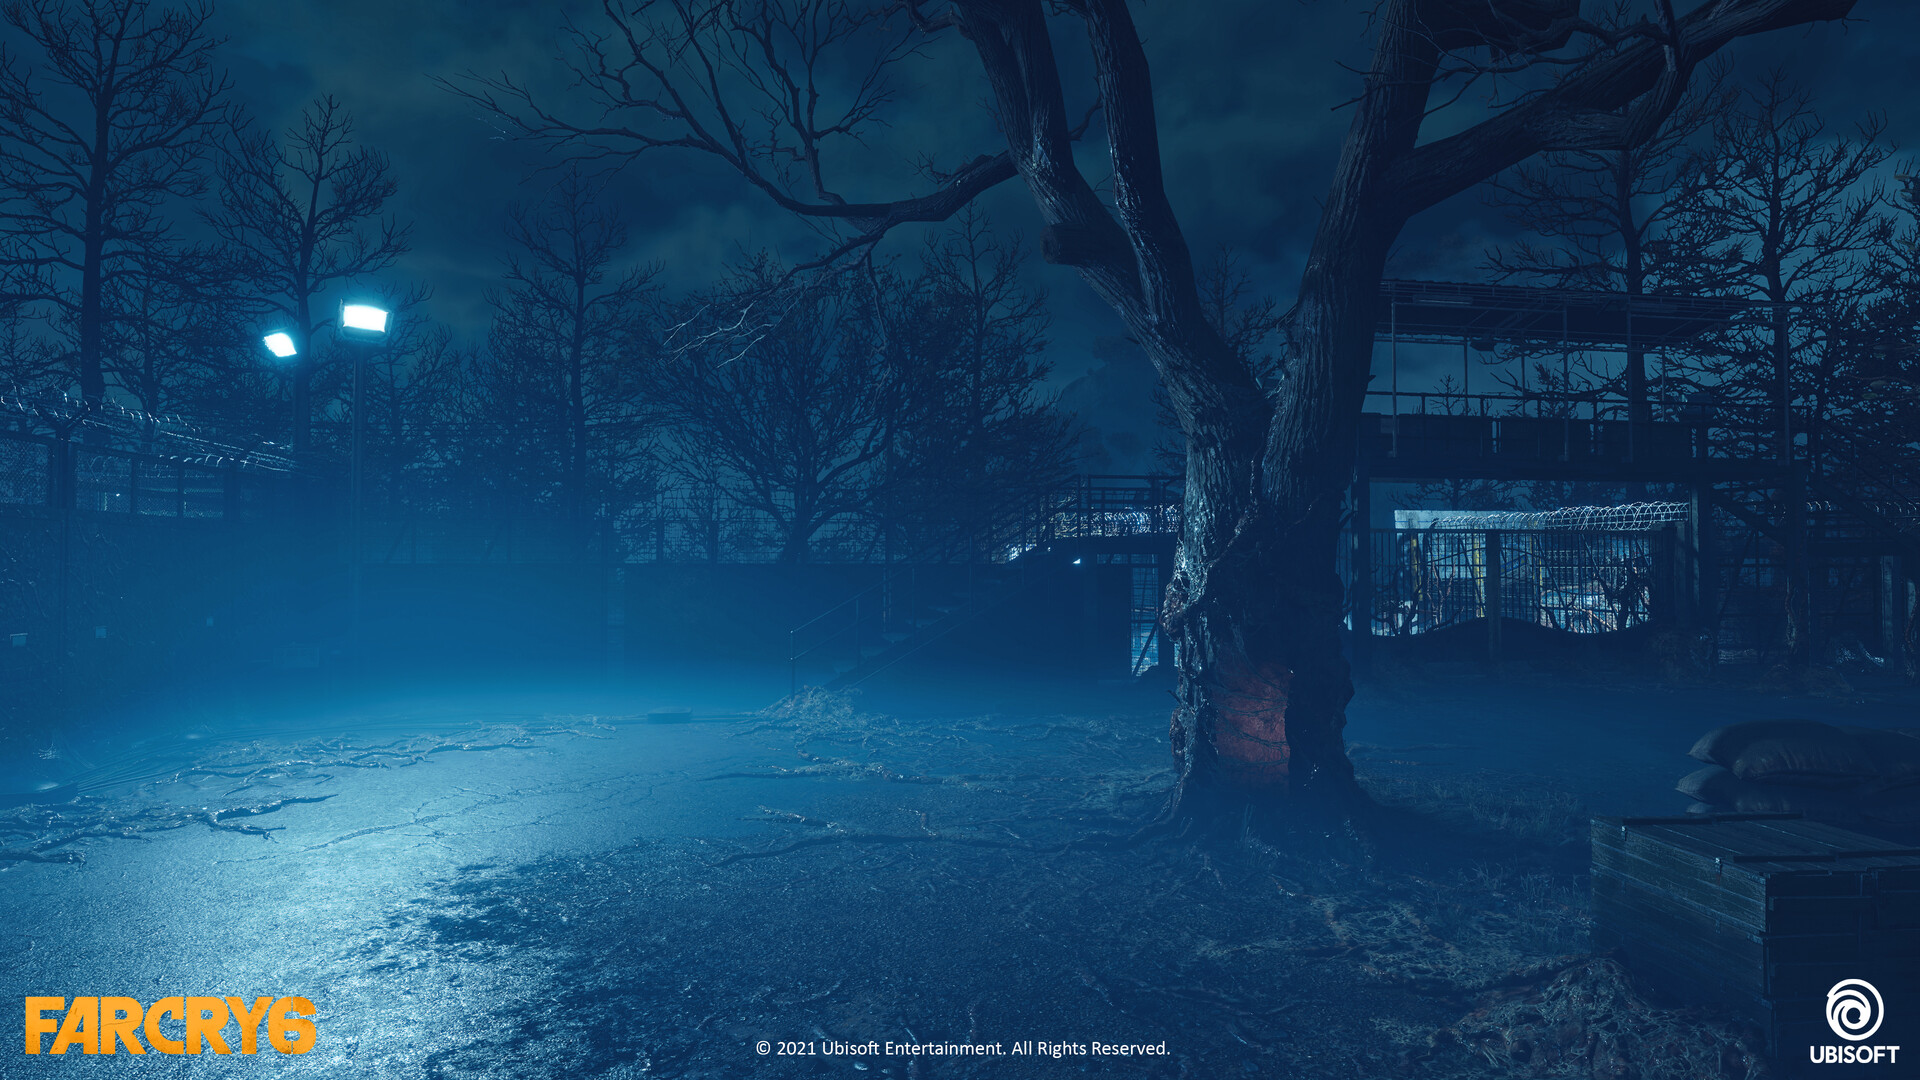 Taeha Park - The Vanishing: Far Cry 6 X Stranger Things - Lighting Exterior